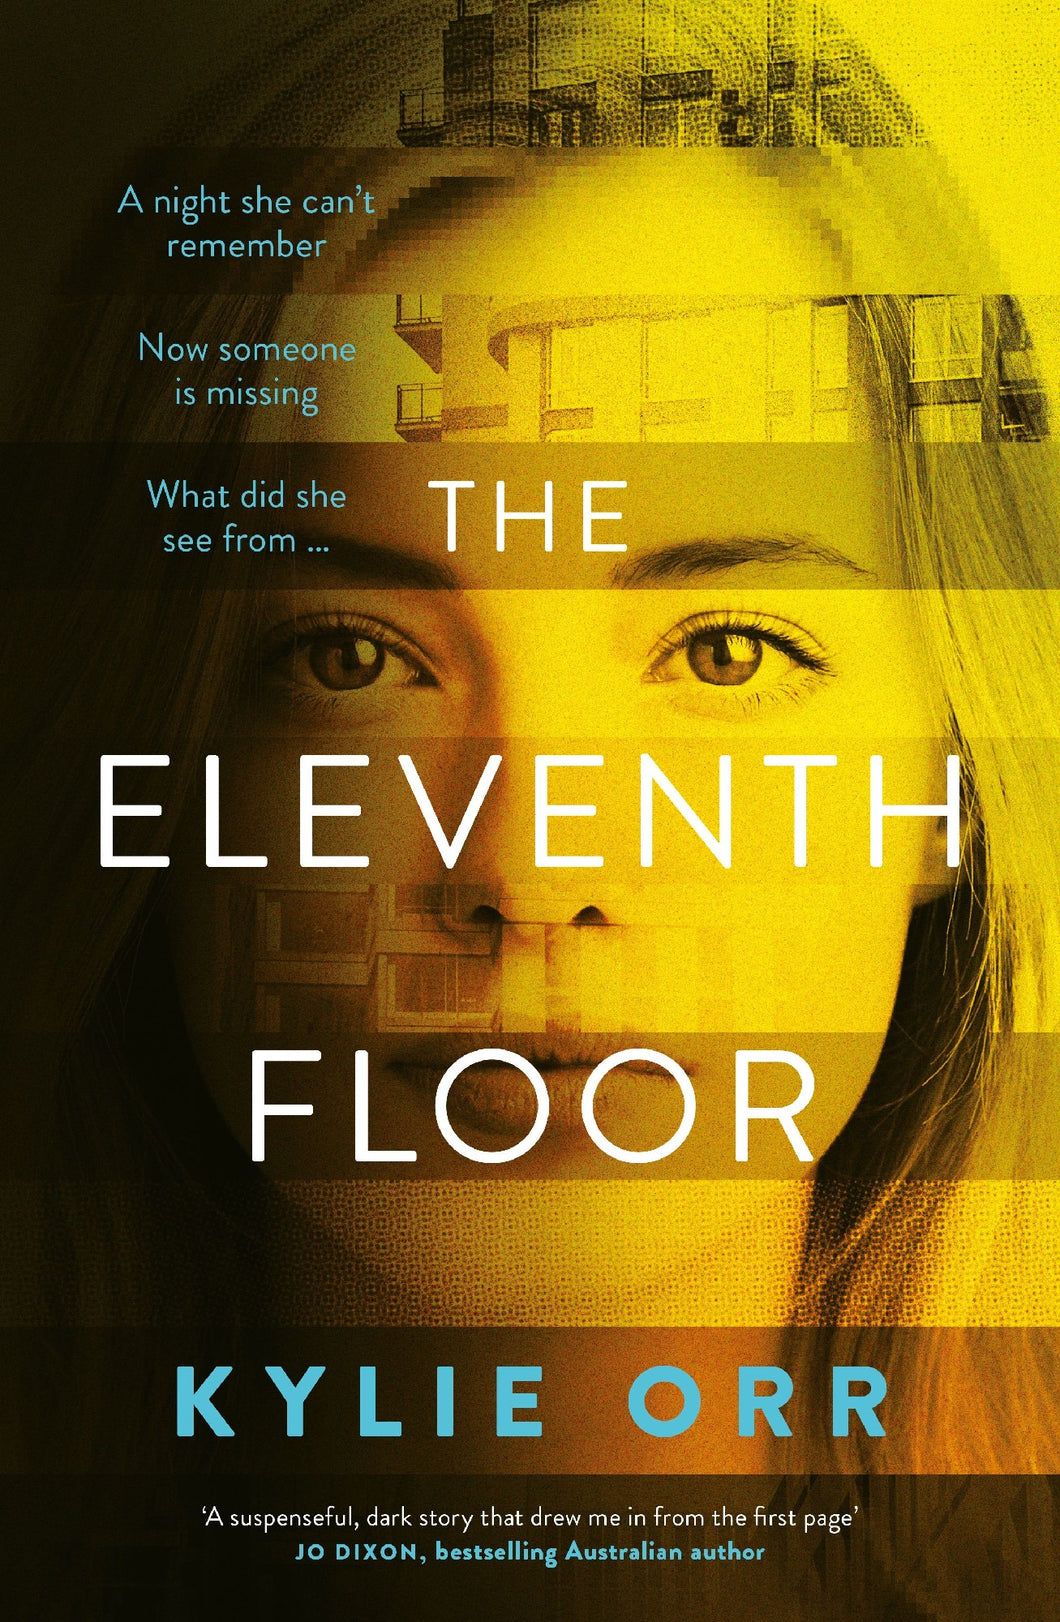 The Eleventh Floor